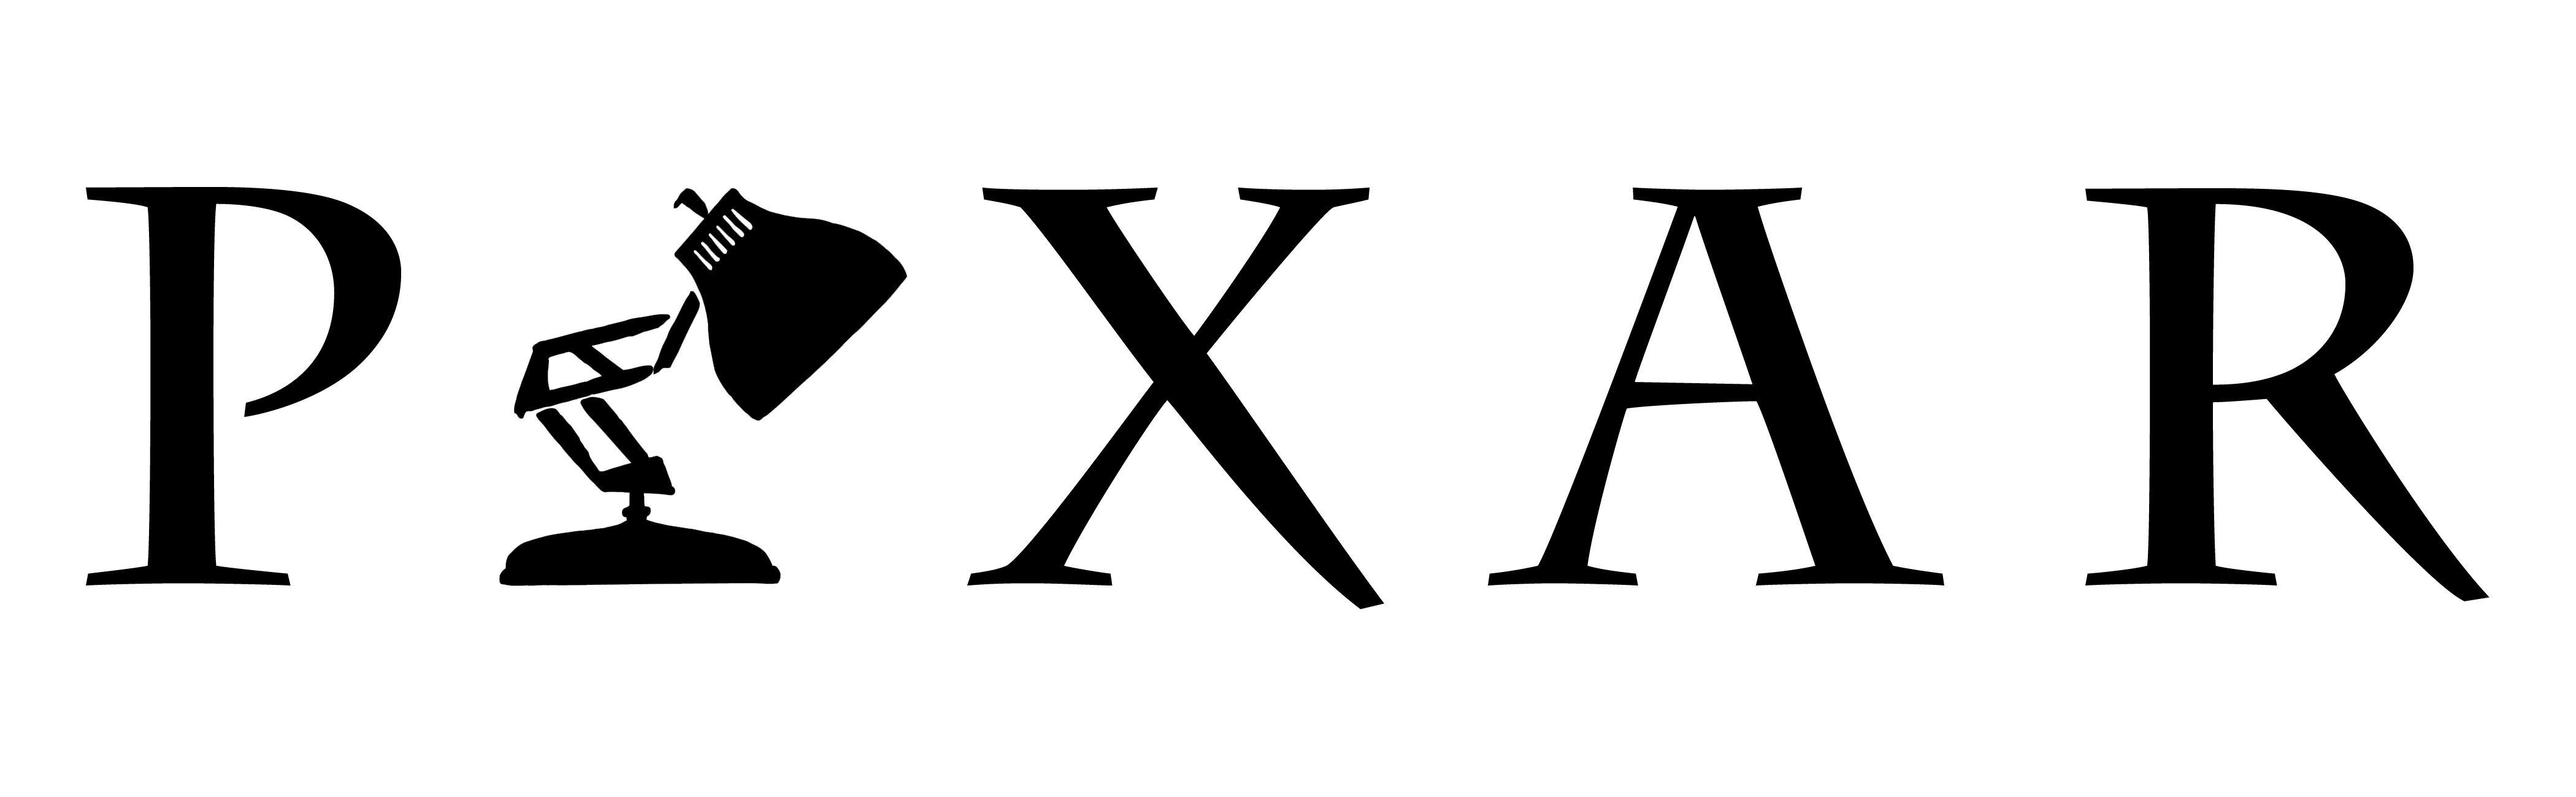 Pixar Logo - Pixar Logo, Pixar Symbol, Meaning, History and Evolution